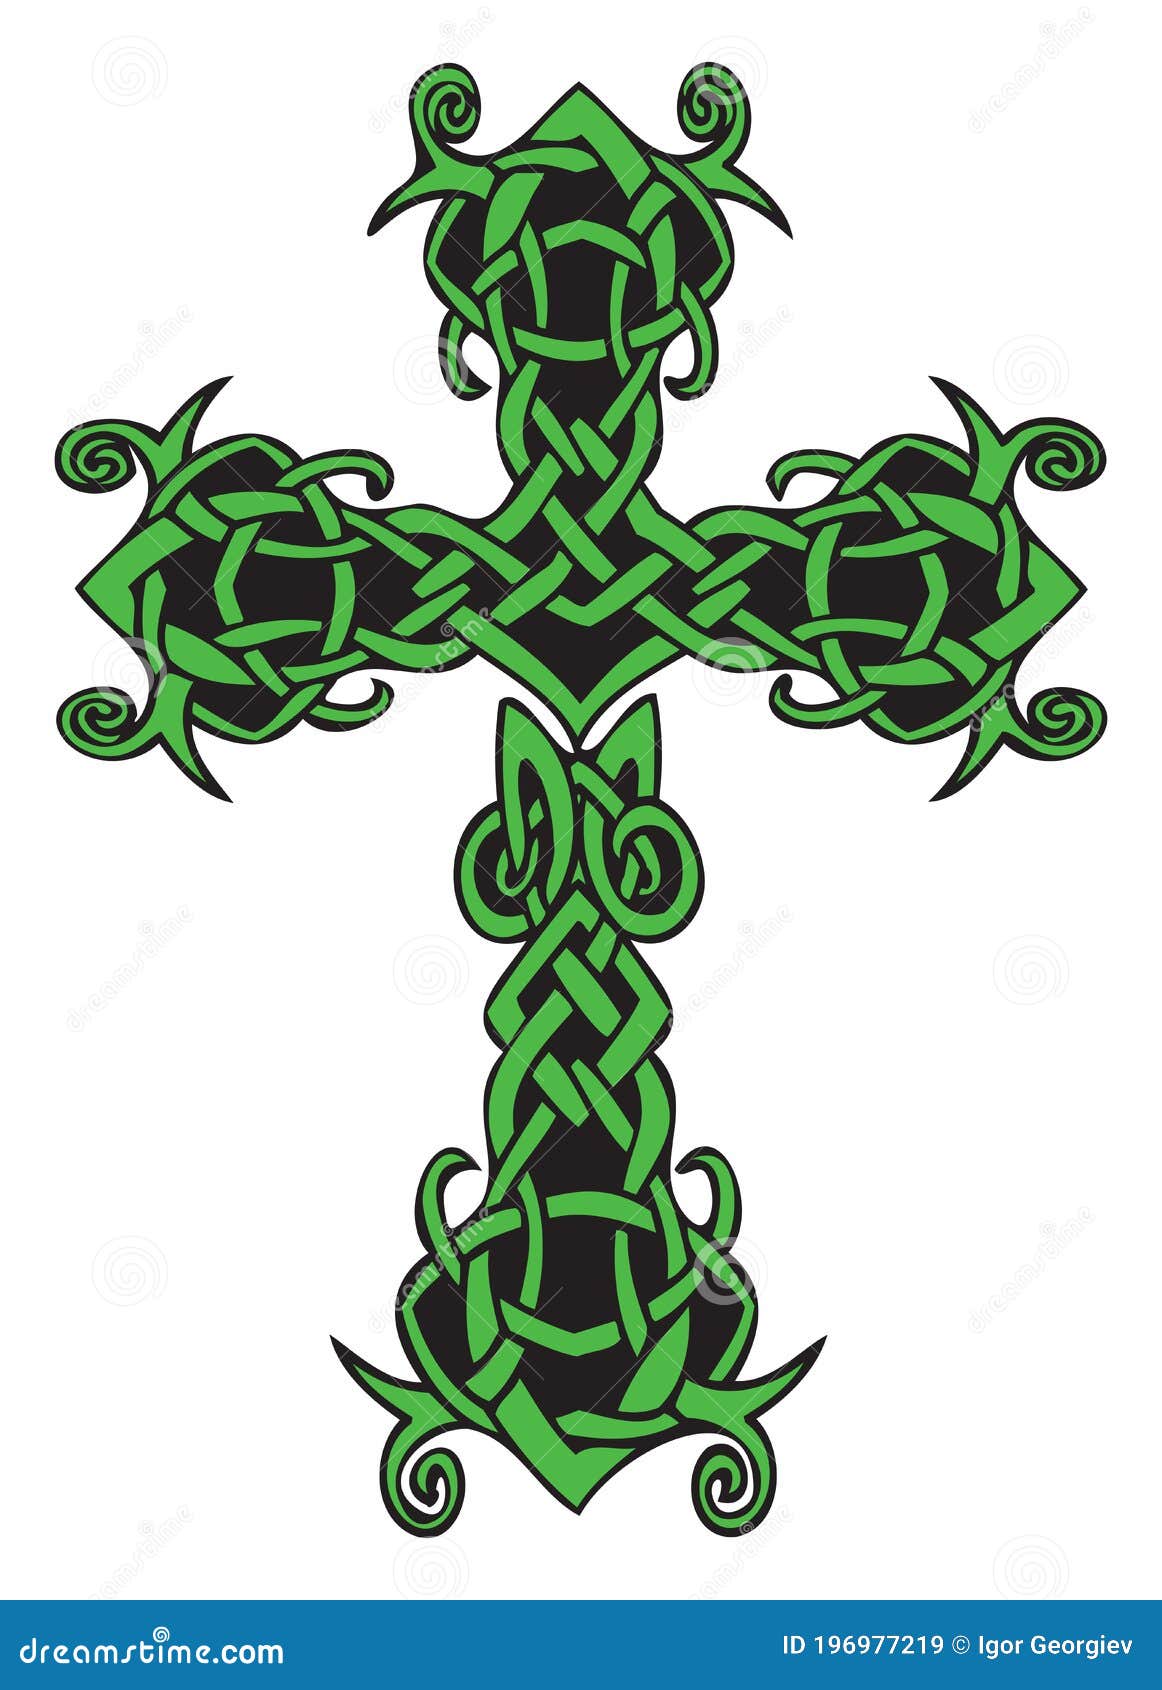 Decorative Irish Celtic Knot Cross Tattoo Flash Stock Vector - Illustration  of patrick, banner: 196977219